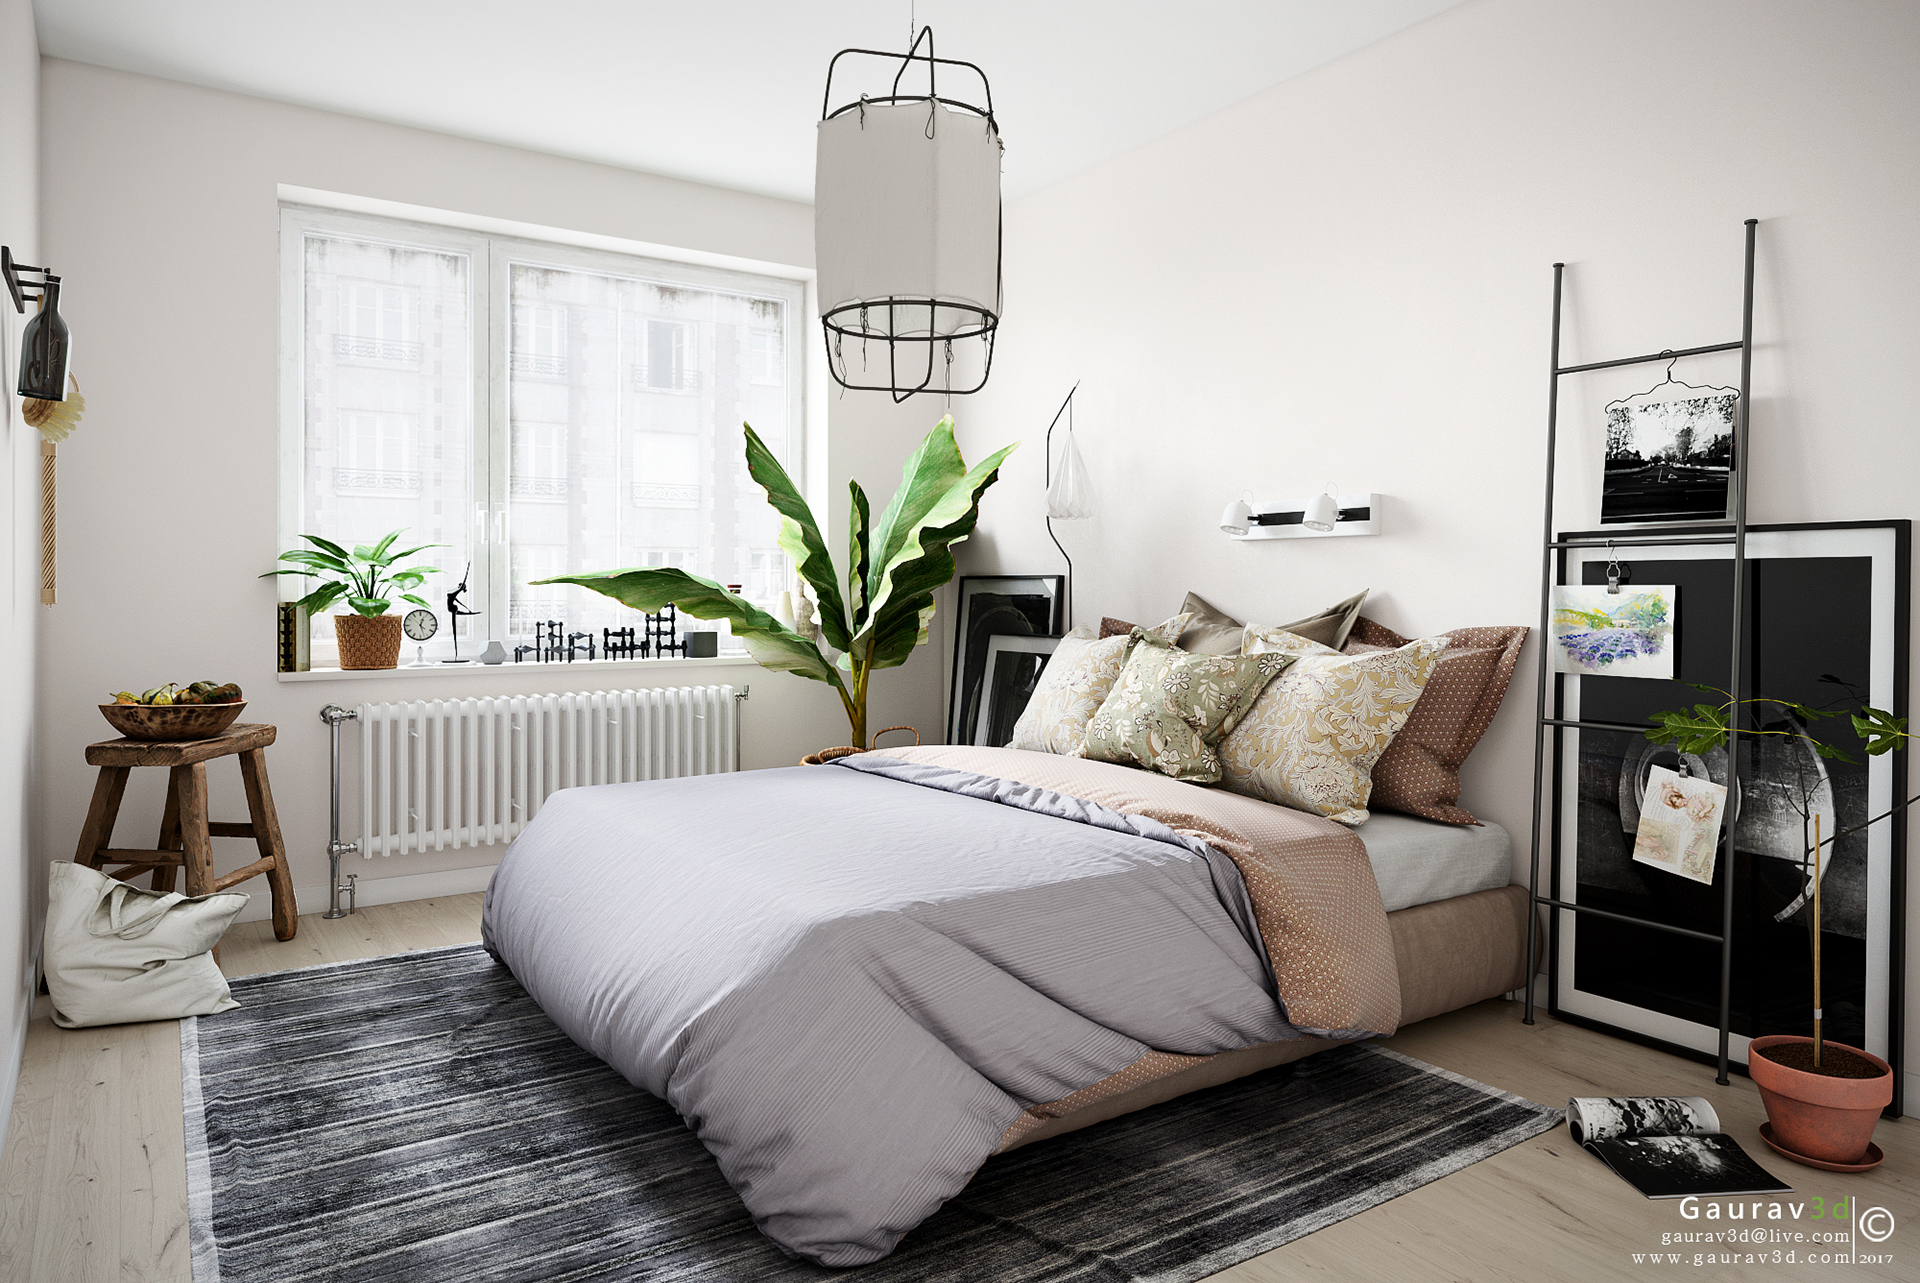 A Scandinavian-style bedroom - Ronen Bekerman - 3D Architectural